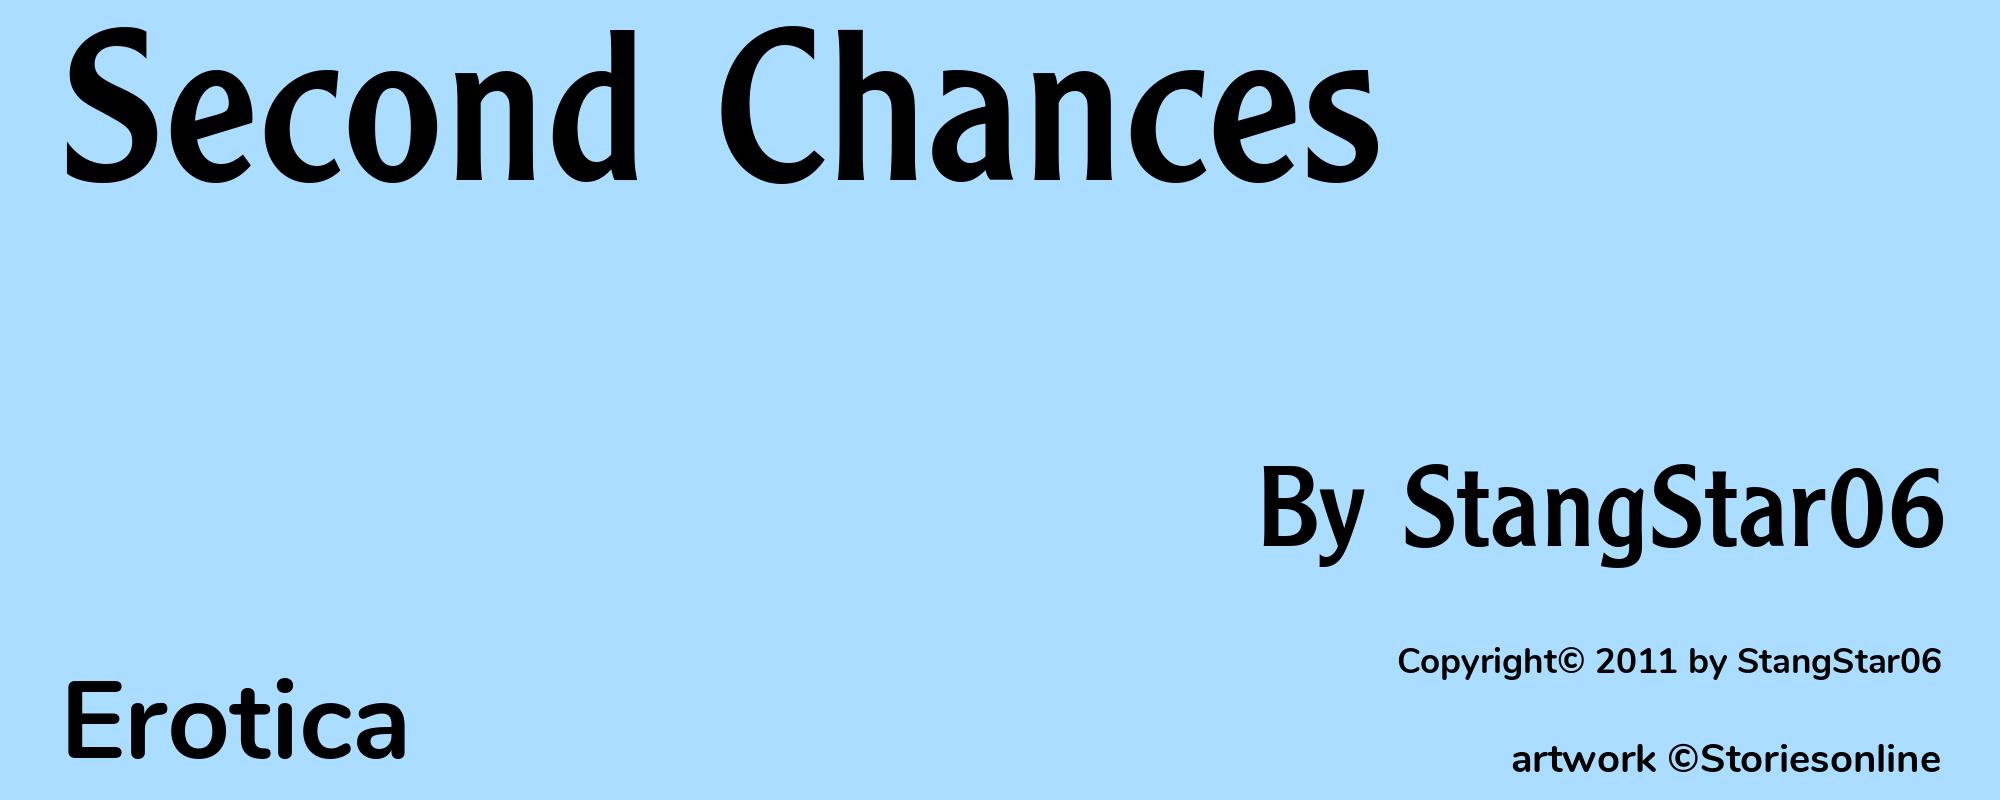 Second Chances - Cover